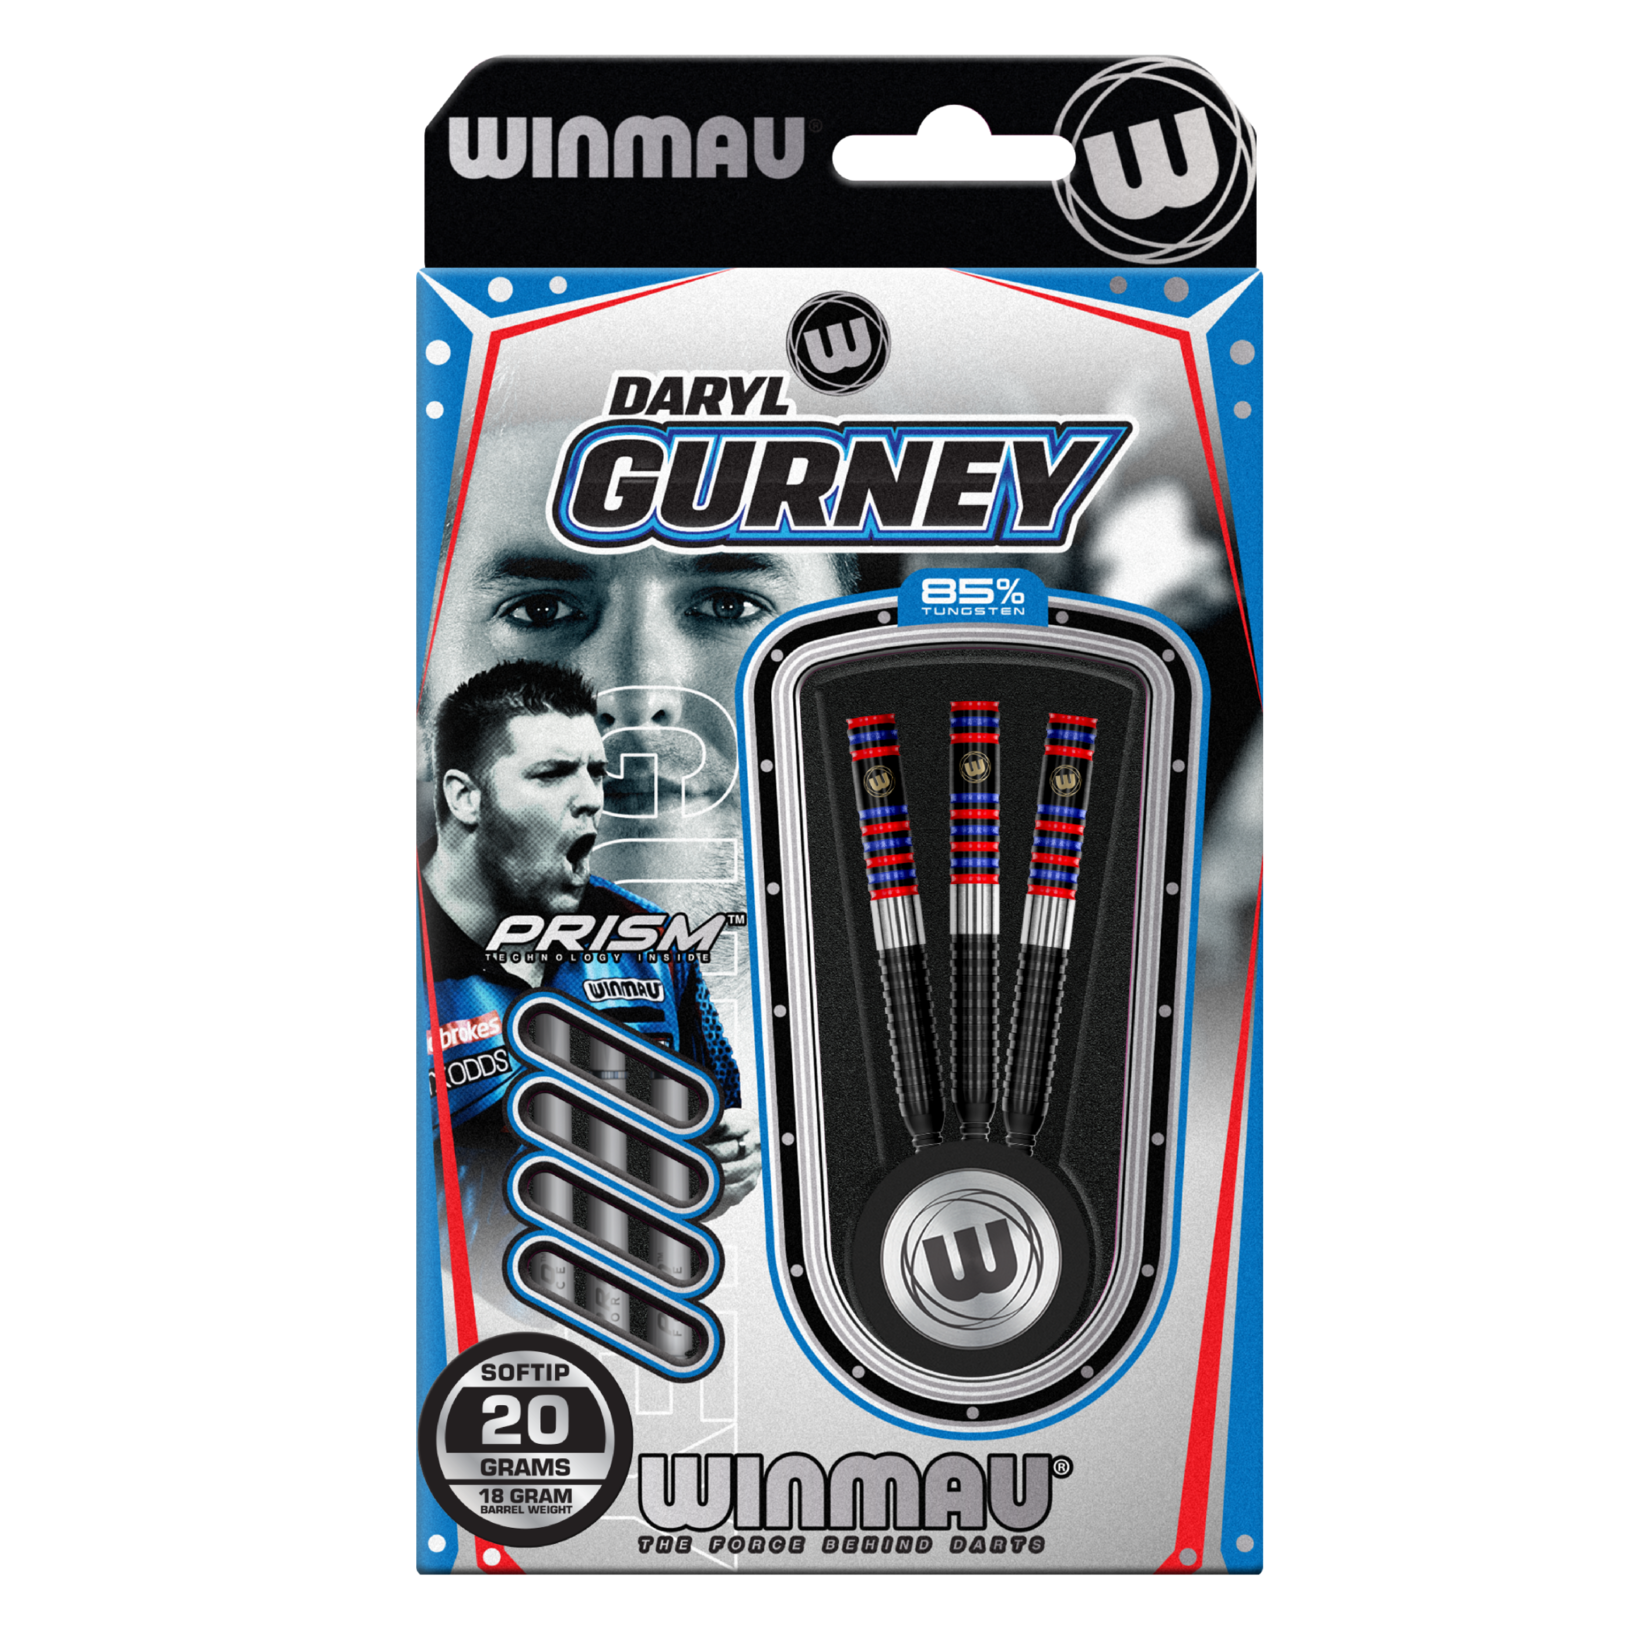 Winmau Darts Winmau Daryl Gurney Pro-Series 85% Soft Tip Darts 20g